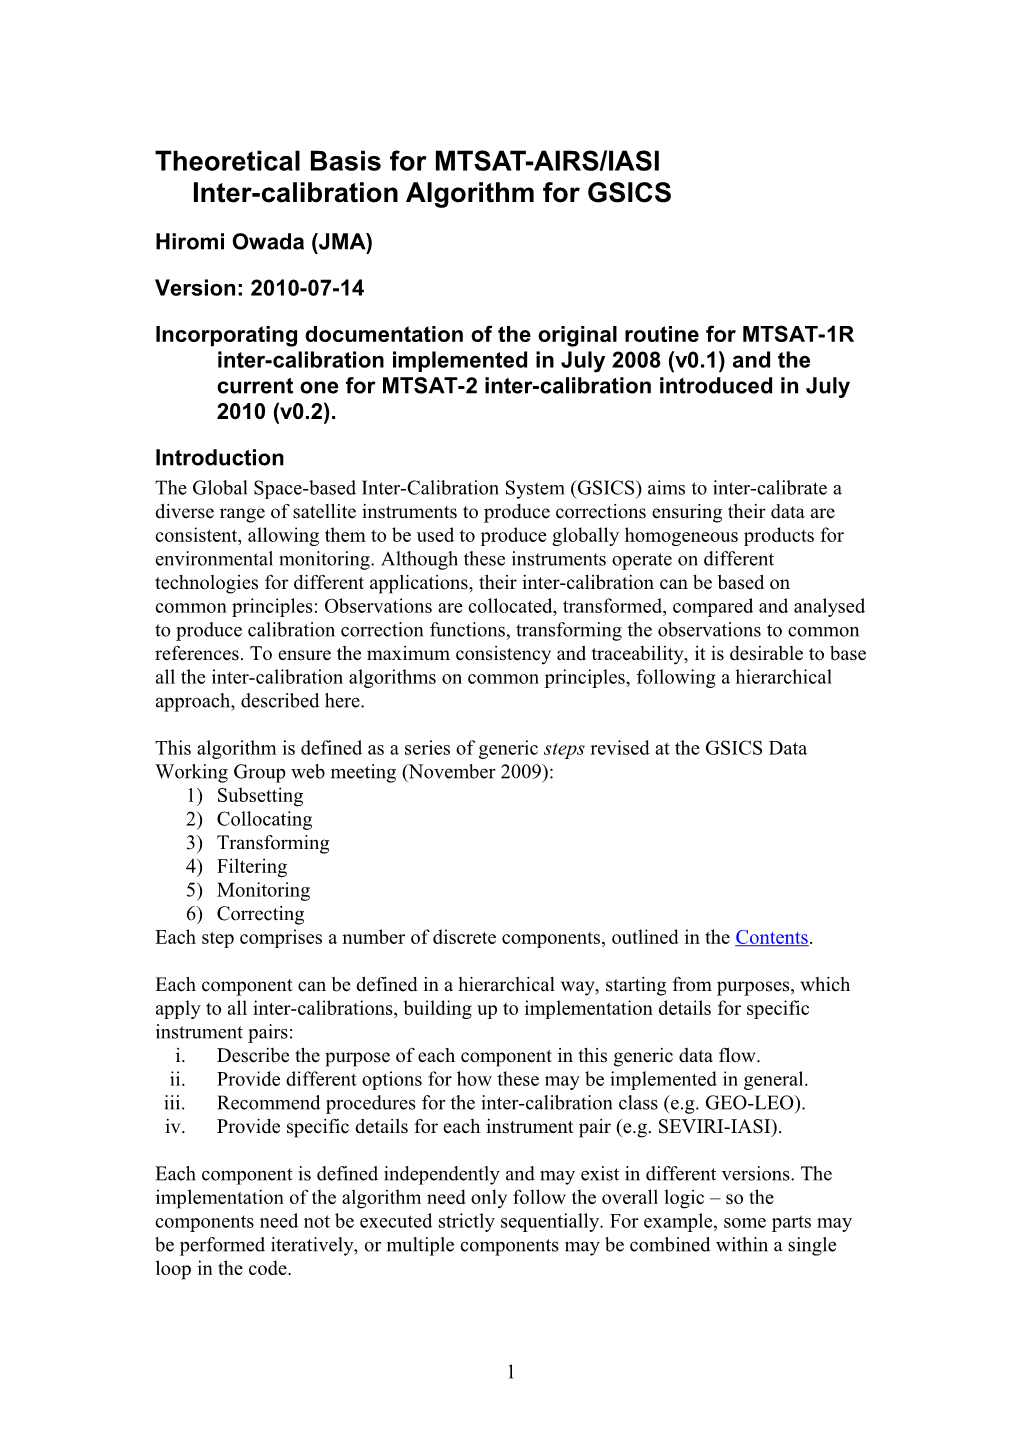 Theoretical Basis for MTSAT-AIRS/IASI Inter-Calibration Algorithm for GSICS